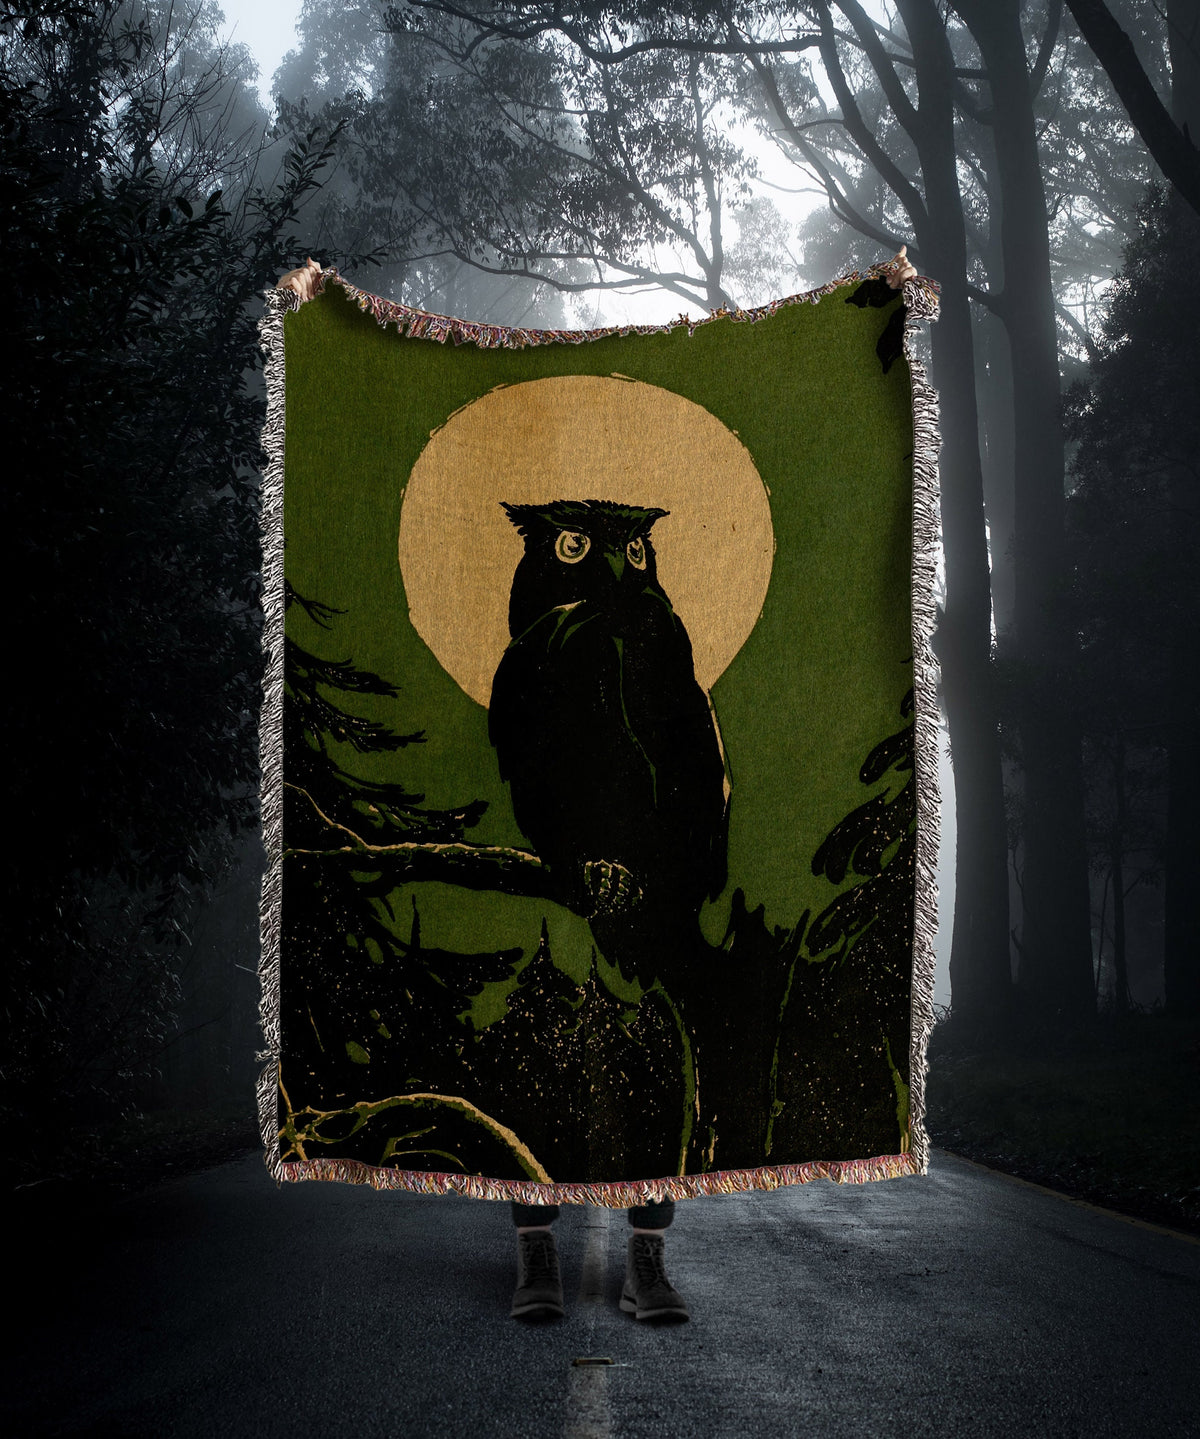 Vintage American Forestry Night Owl Throw Blanket